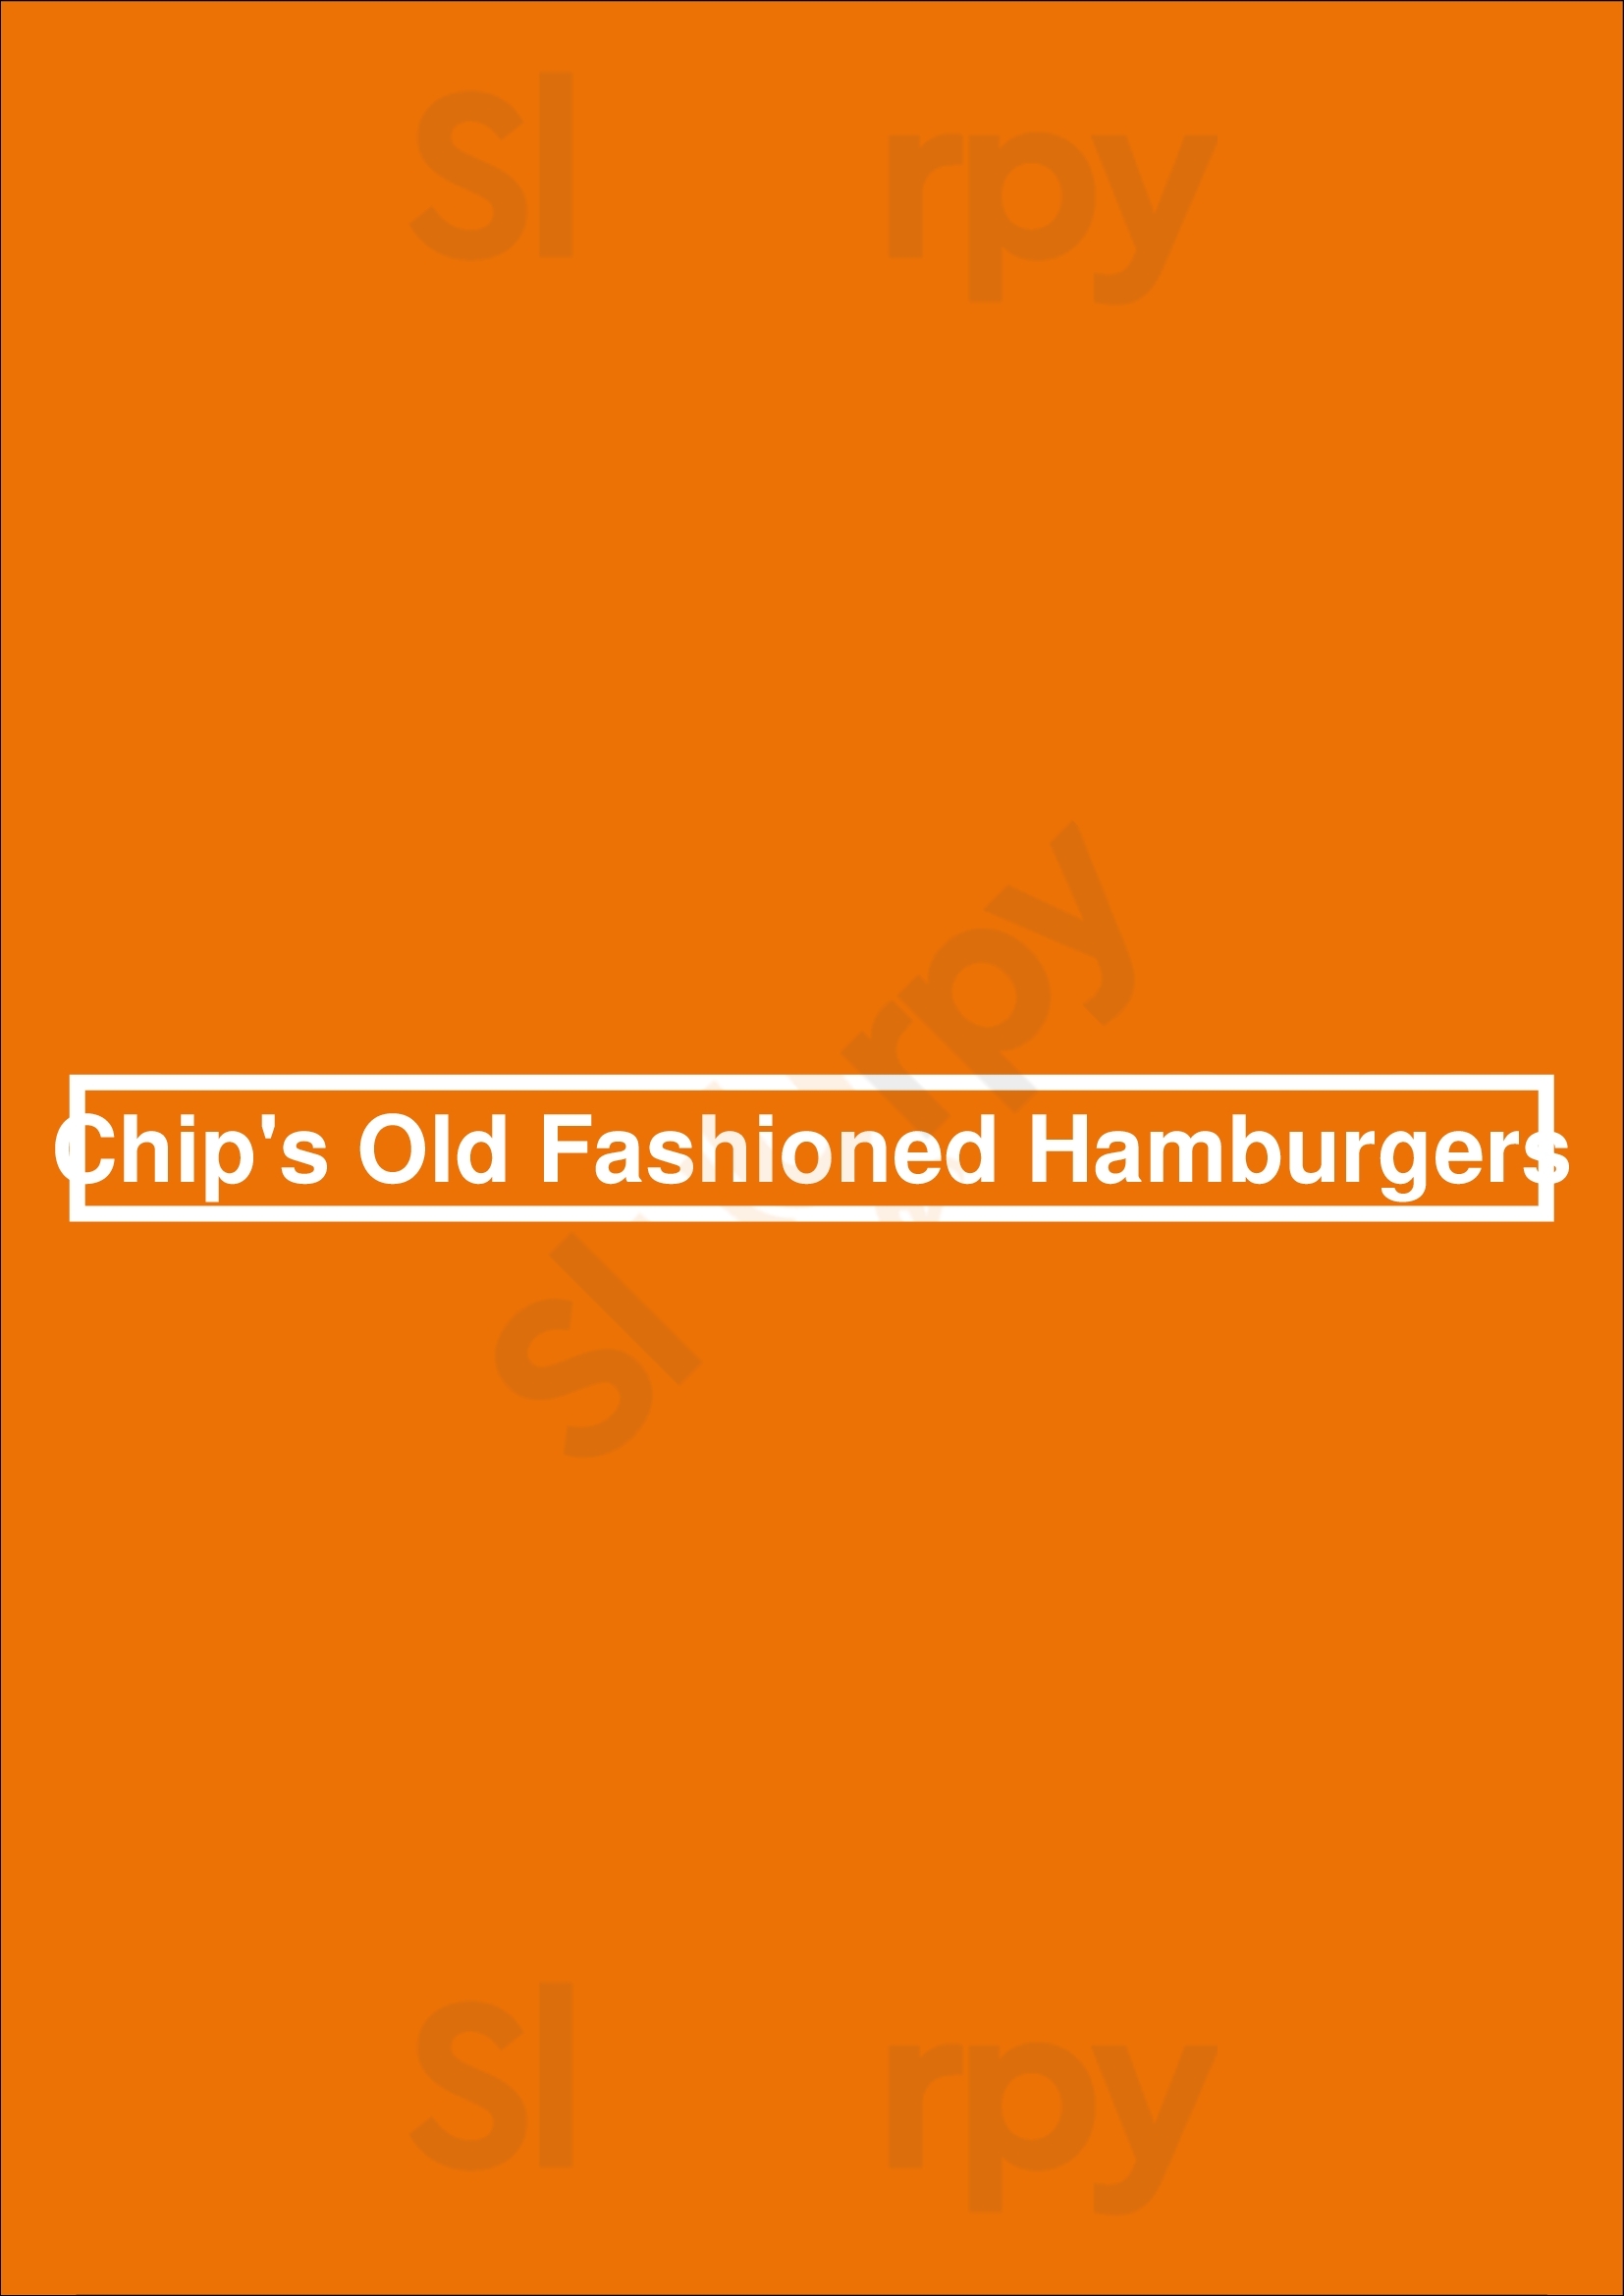 Chip's Old Fashioned Hamburgers Dallas Menu - 1